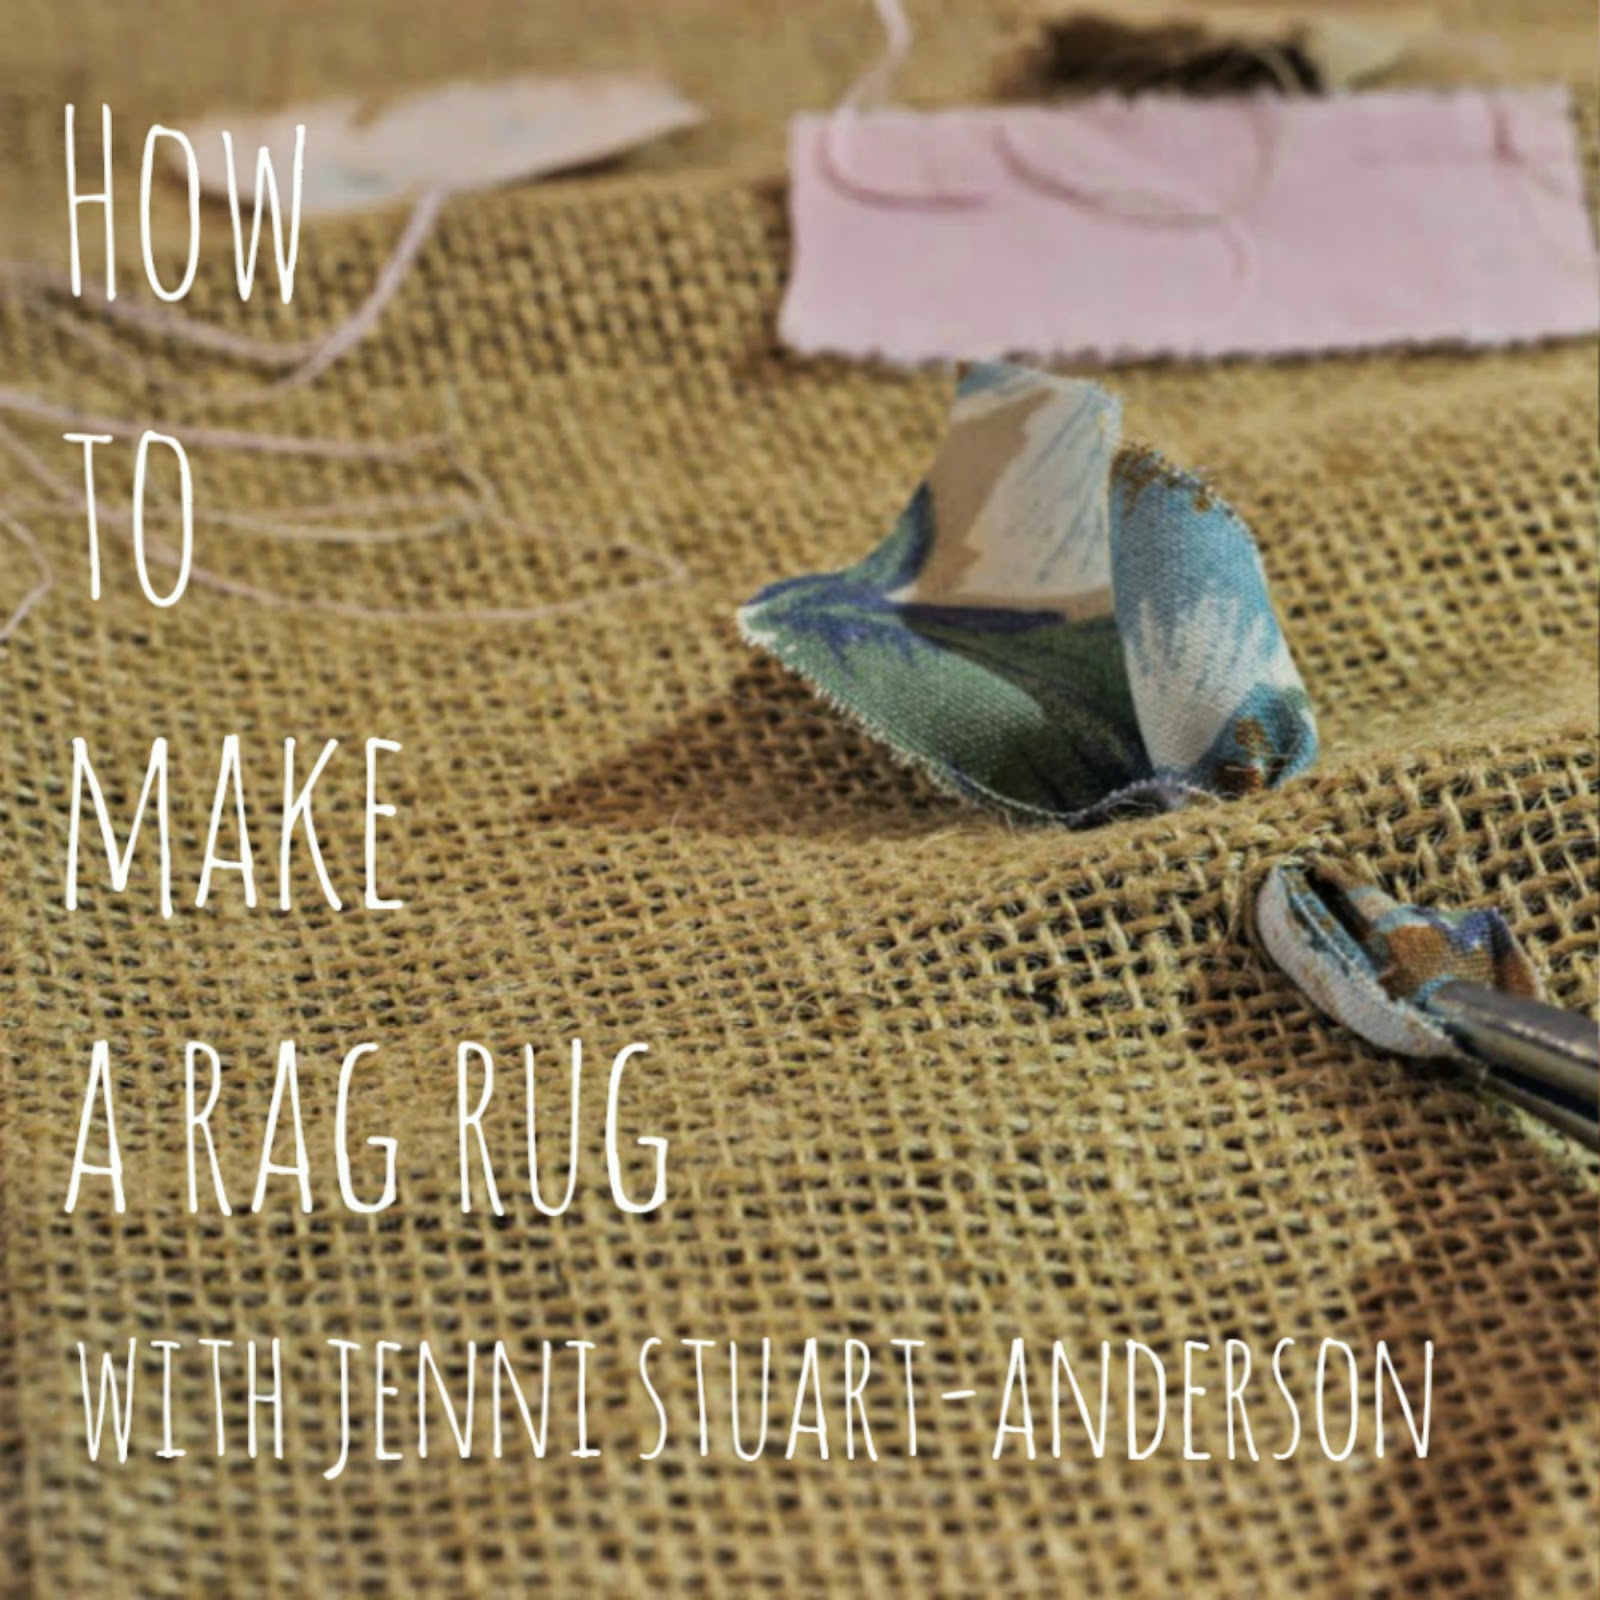 How to make a rag rug